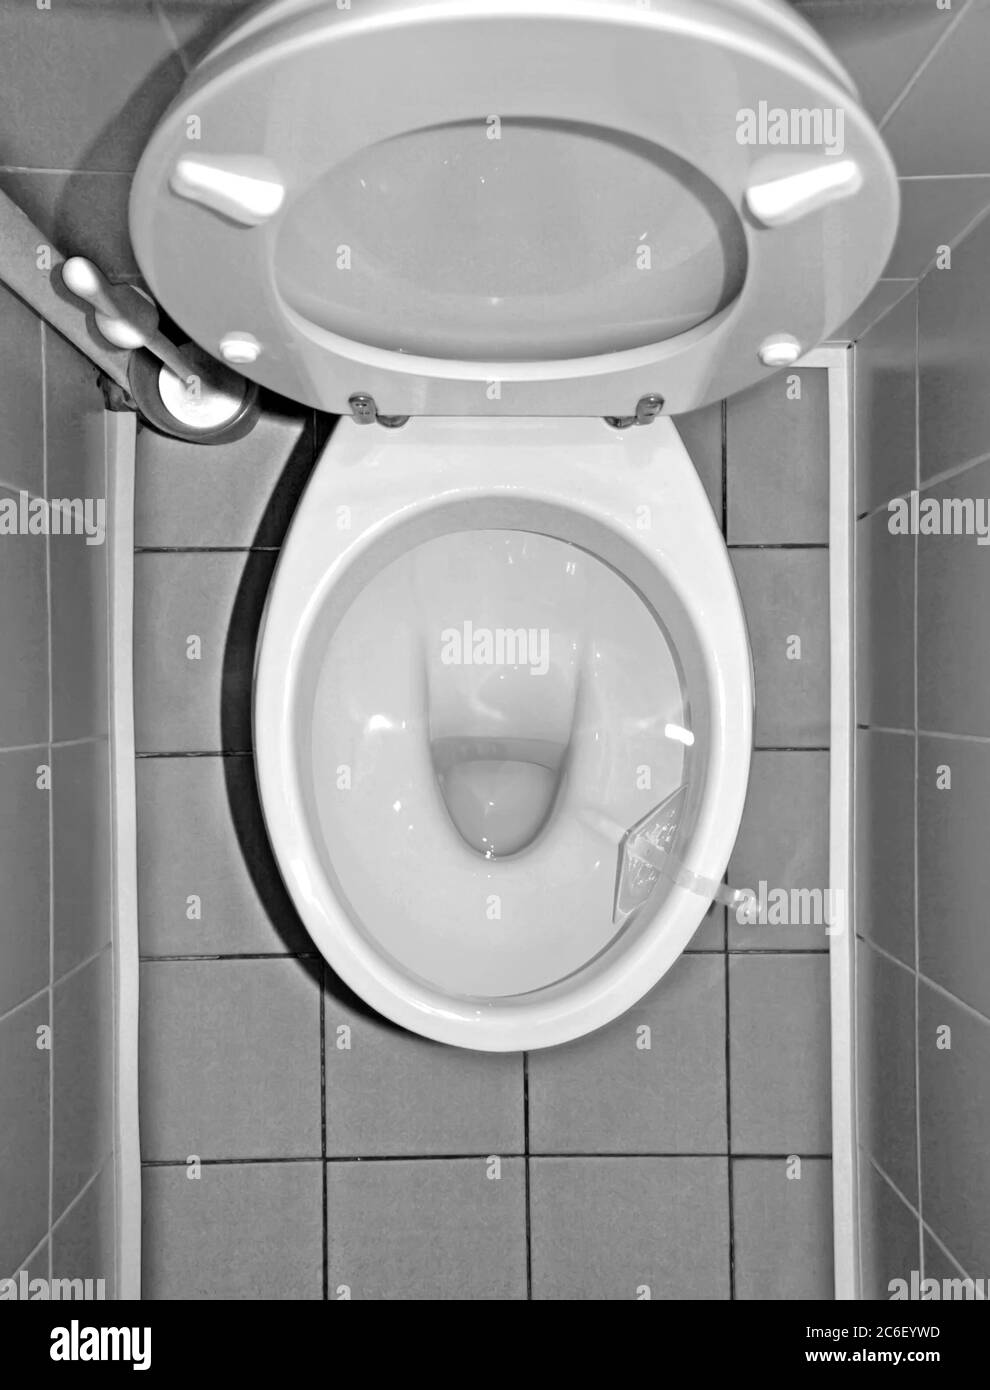 Ceramic flush toilet bowl indoors, top view Stock Photo